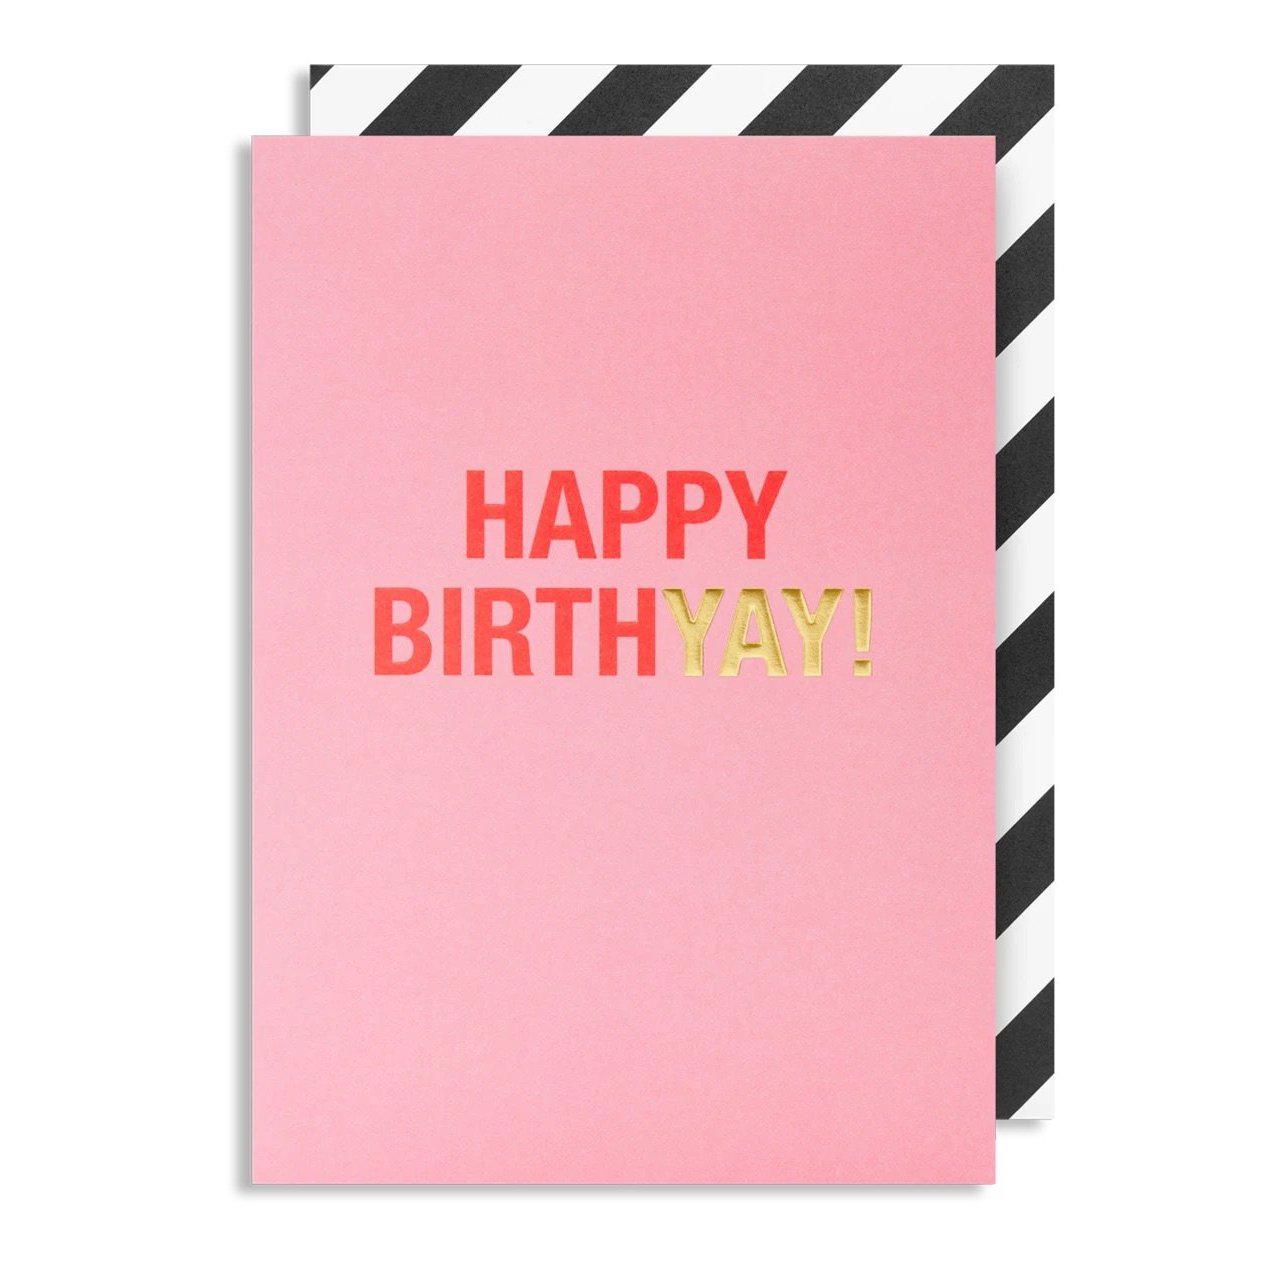 Postco “Happy Birthyay!” Greeting Card-Breda's Gift Shop